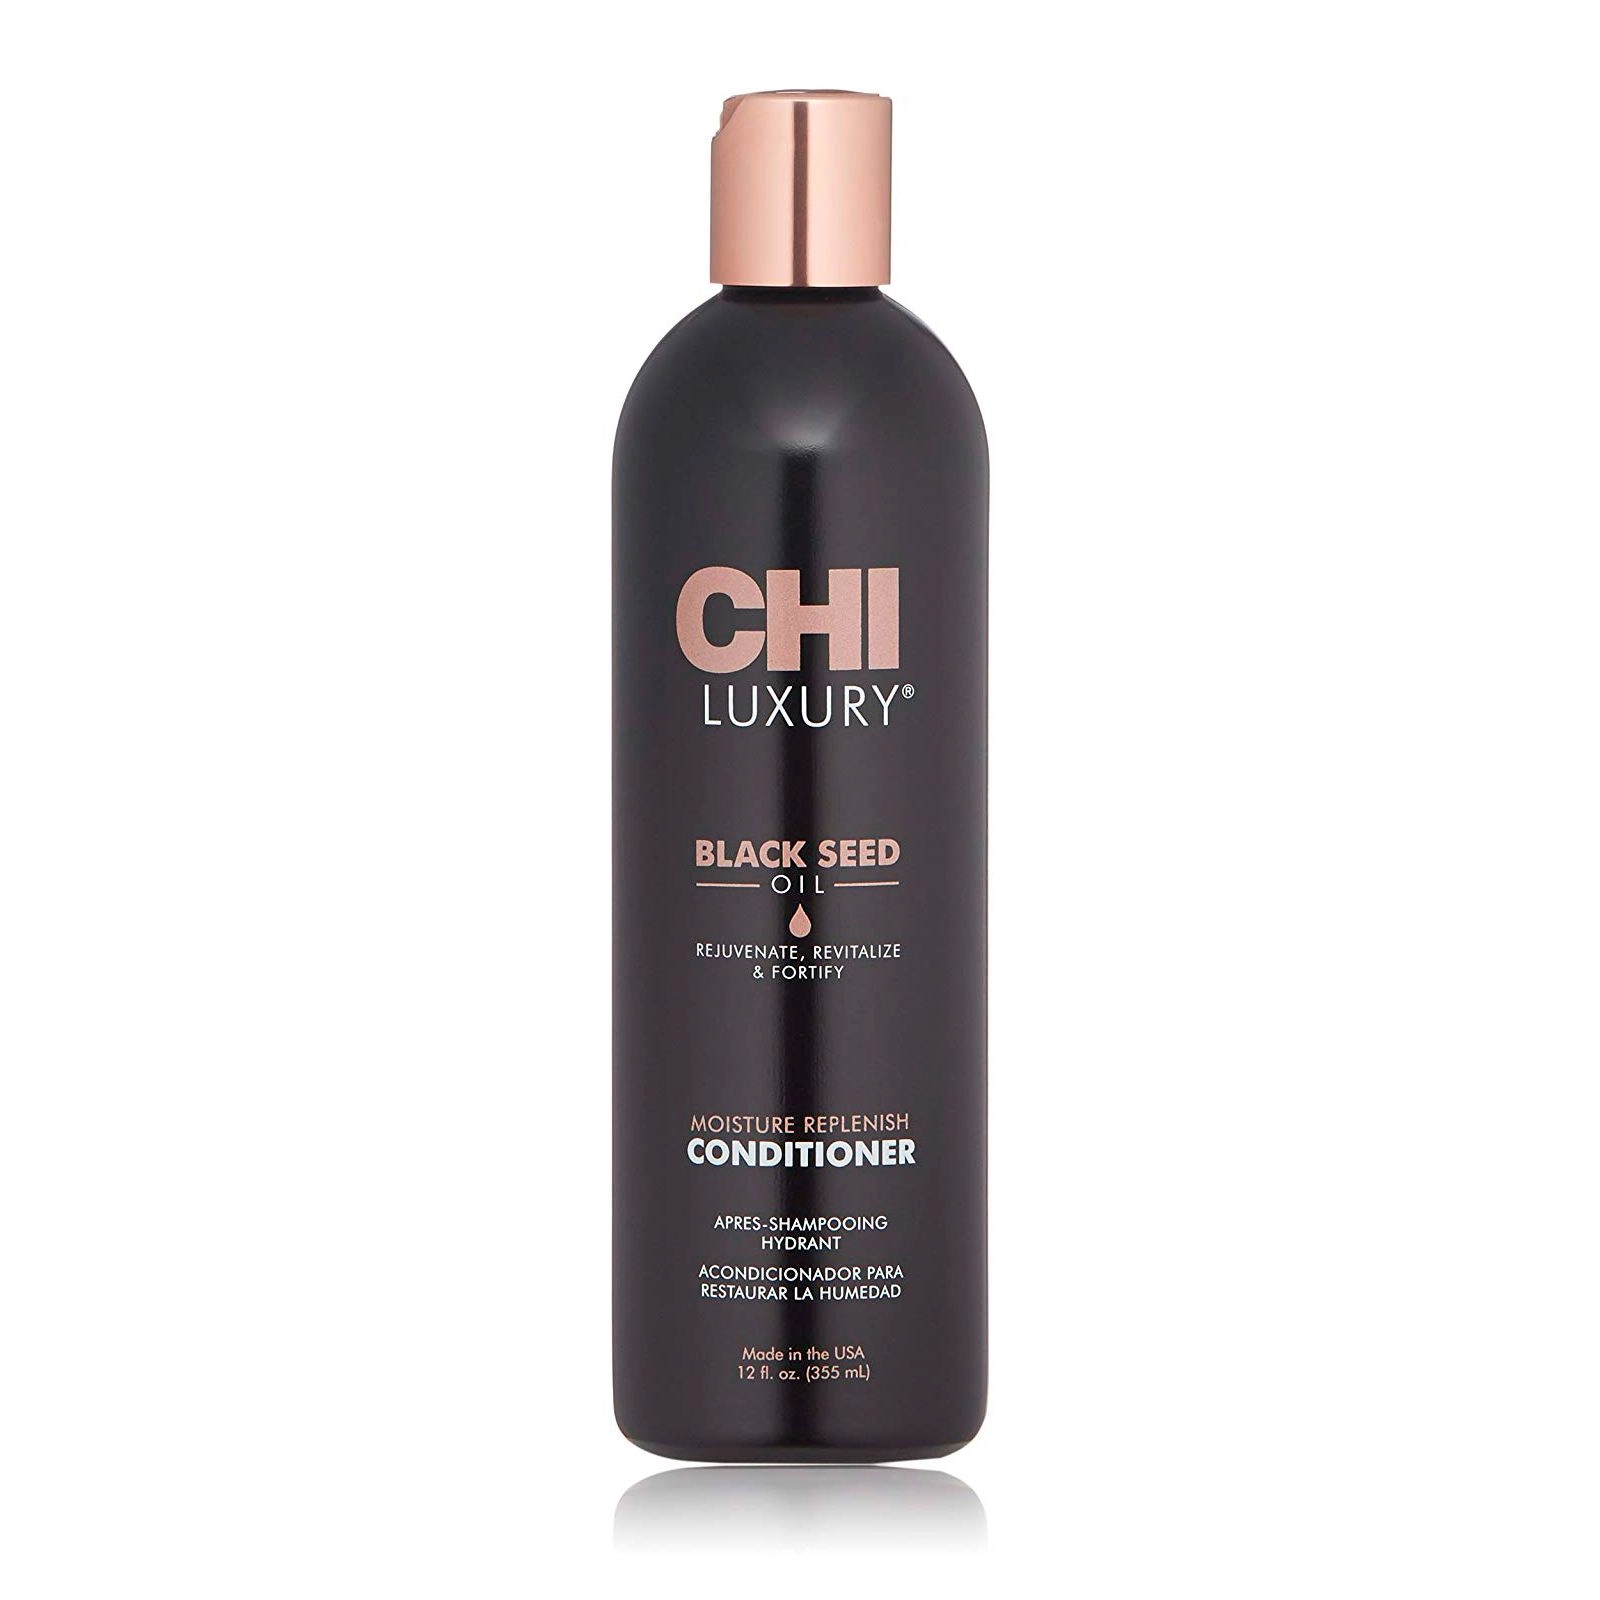 Увлажняющий кондиционер для волос с маслом черного тмина - CHI Luxury Black Seed Oil Moisture Replenish Conditioner, 355 мл - фото N1